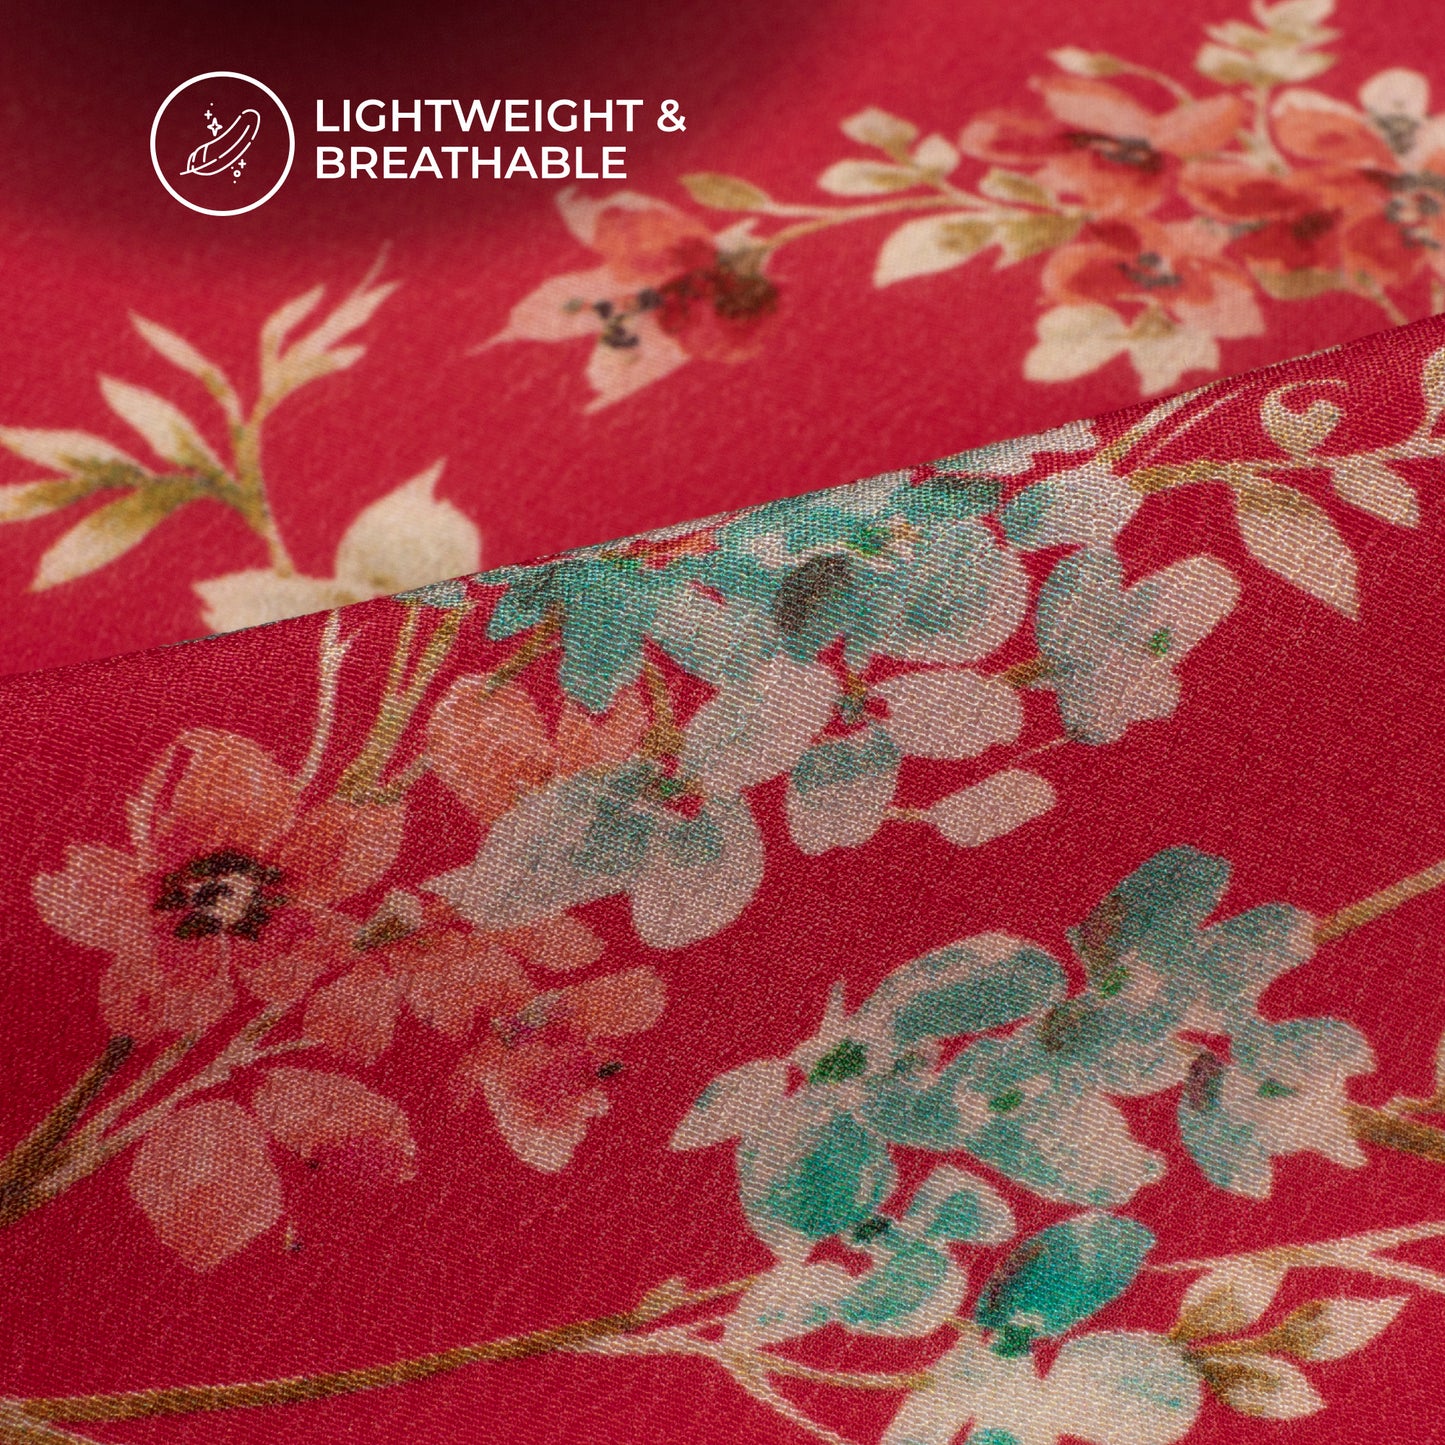 Hot Pink Floral Pattern Digital Print Viscose Natural Crepe Fabric